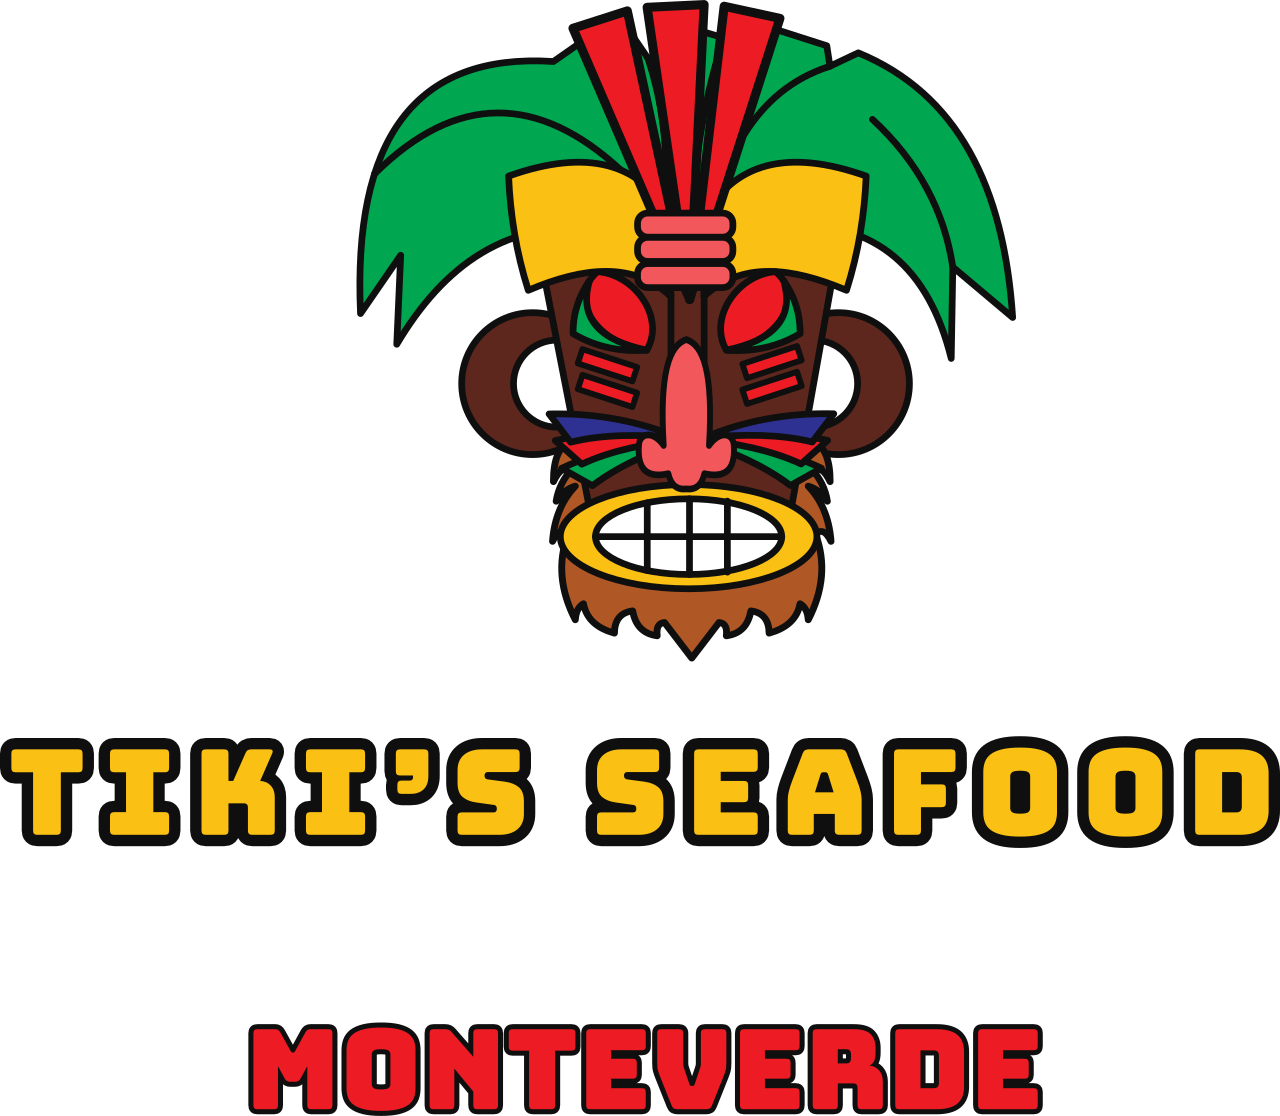 Tiki’s seafood  's logo